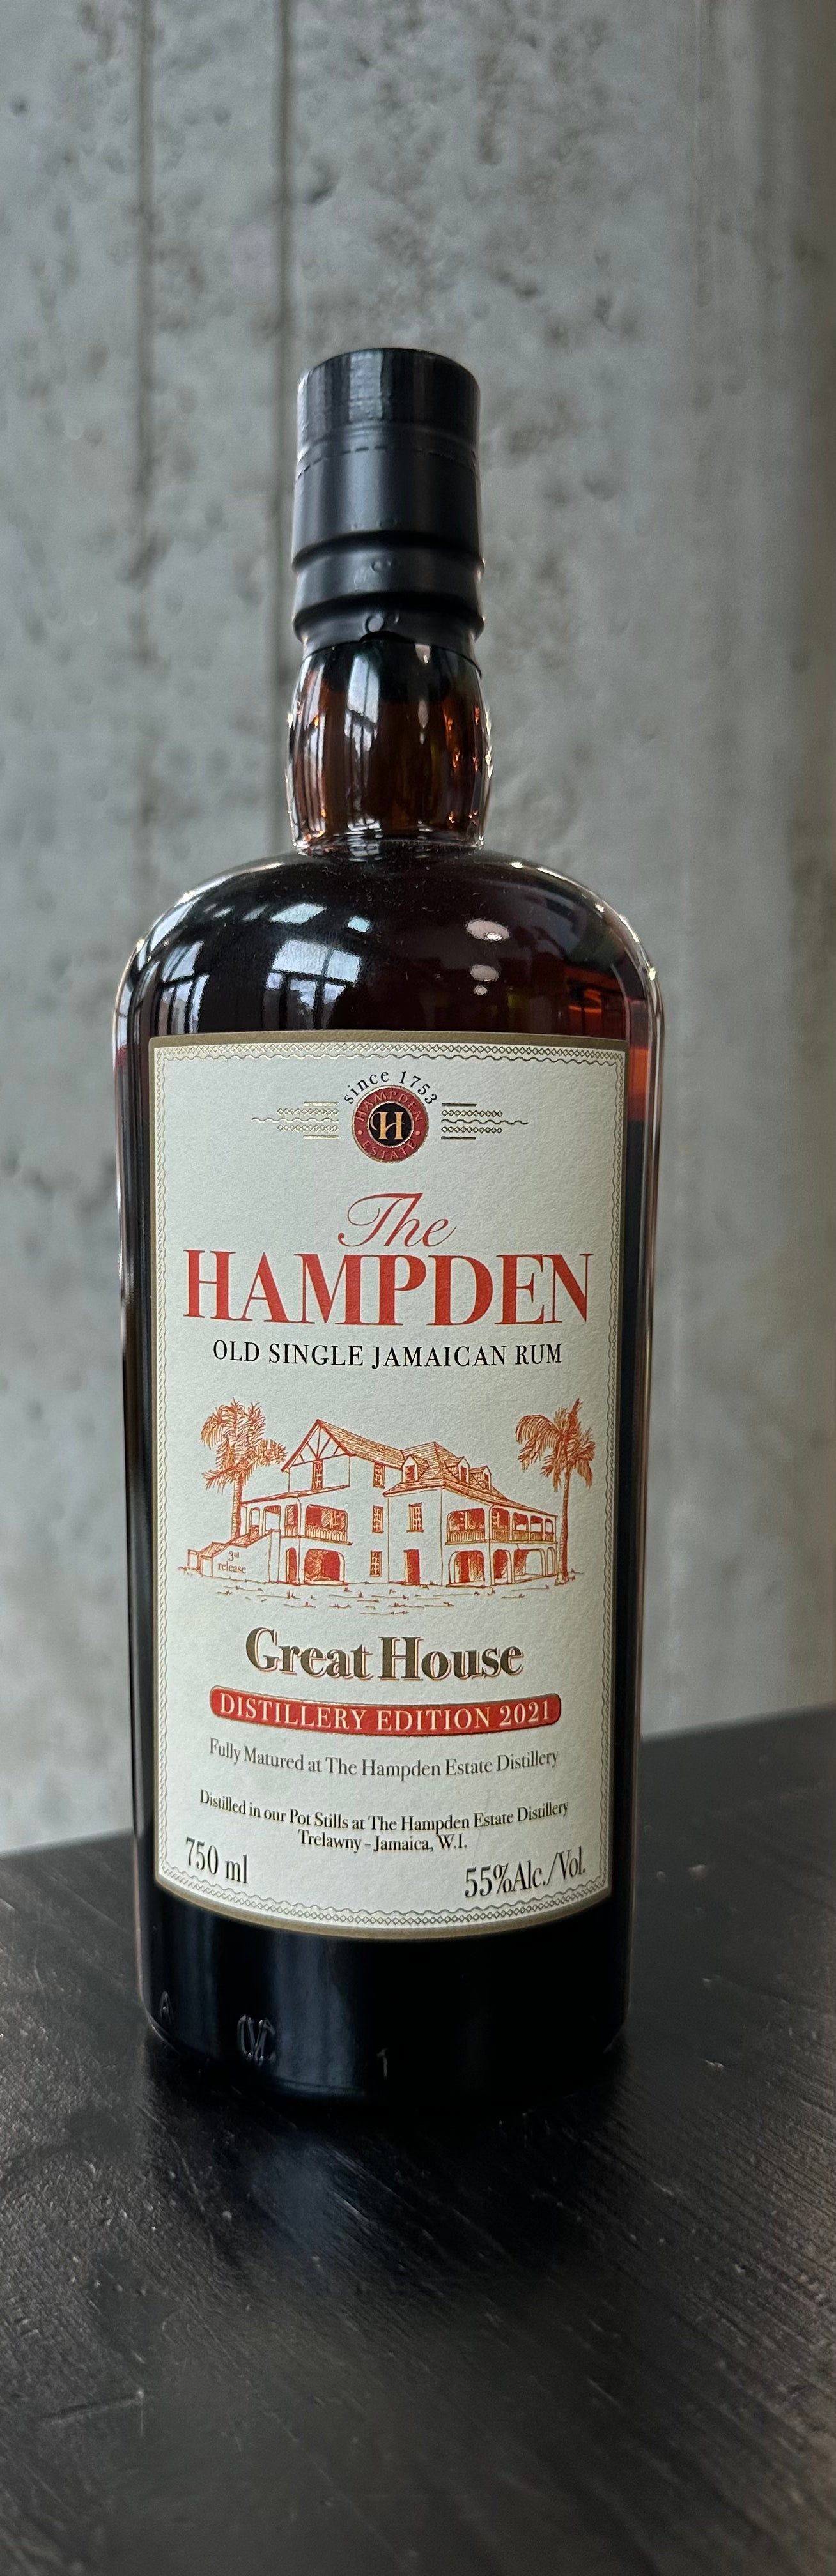 Hampden Old Single Jamaican Rum "Great House" Edition 2021